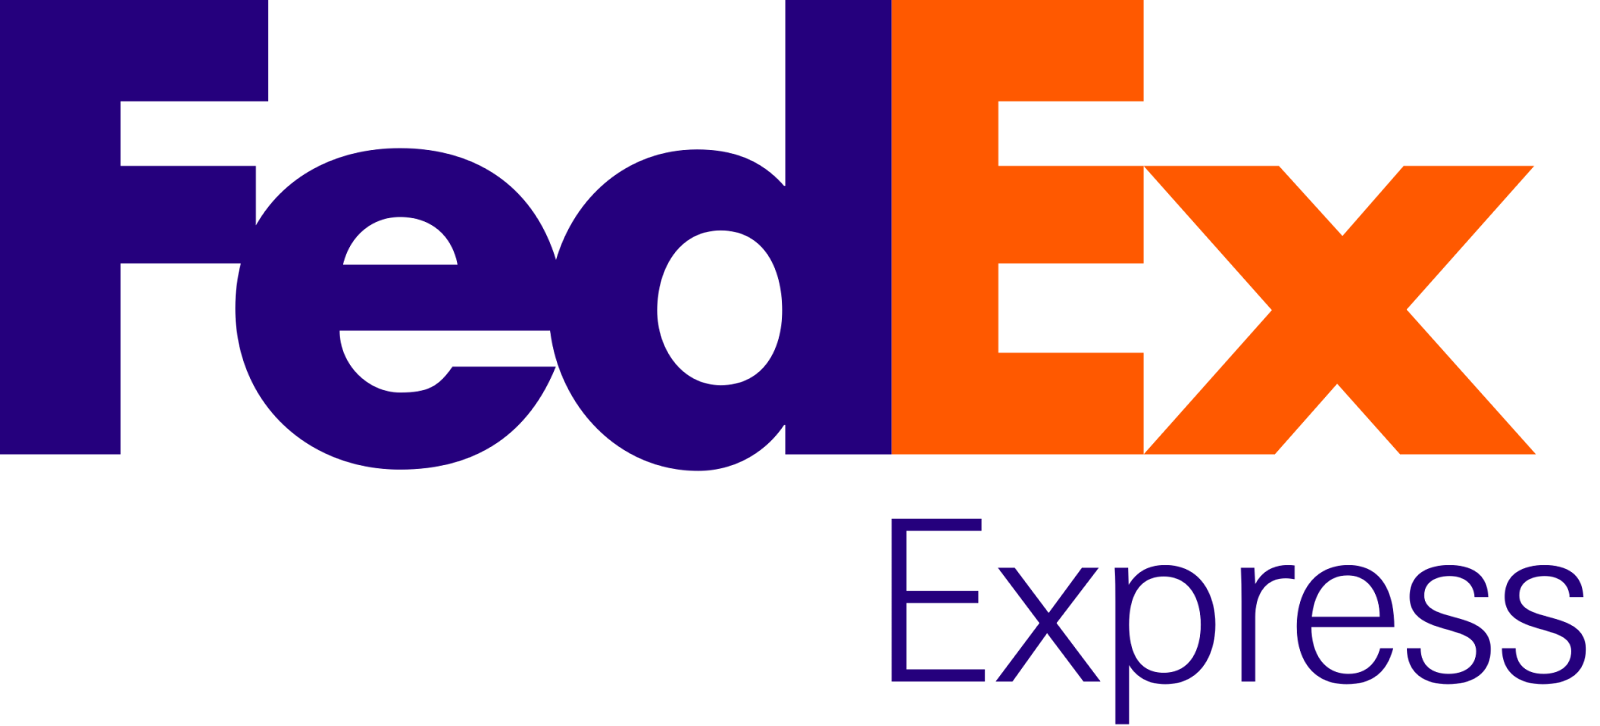 Fedex logo example